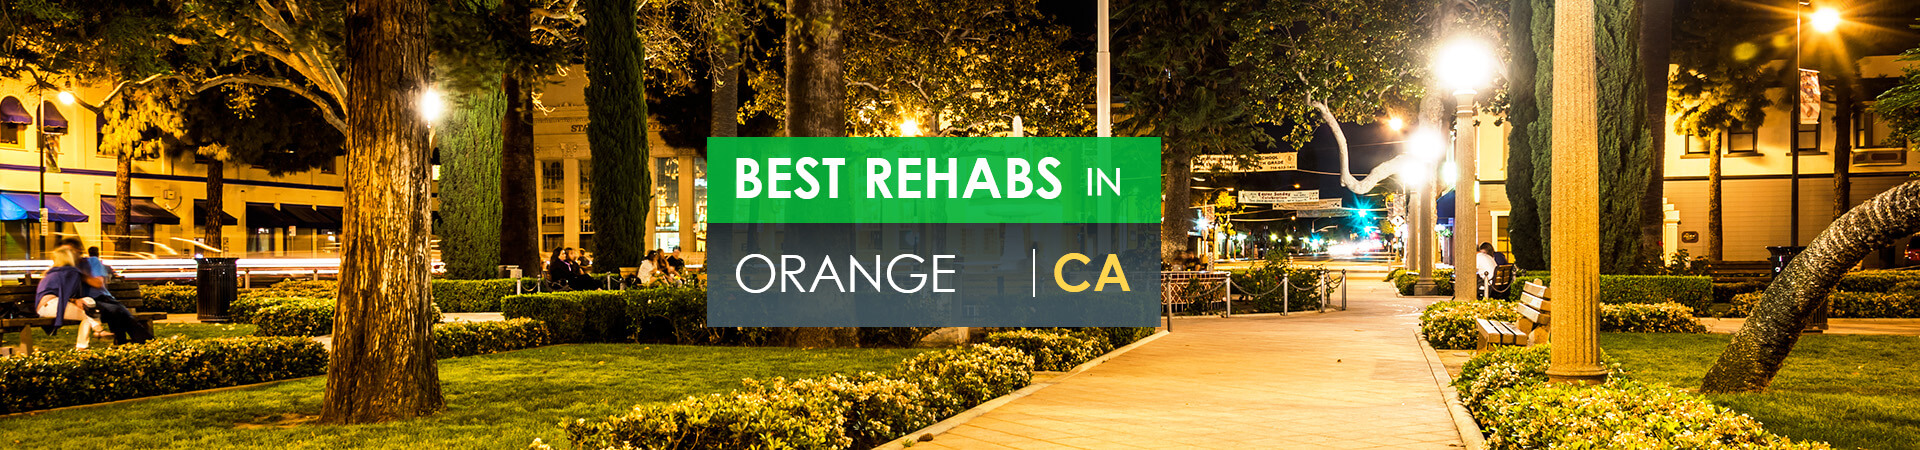 Best rehabs in Orange, CA